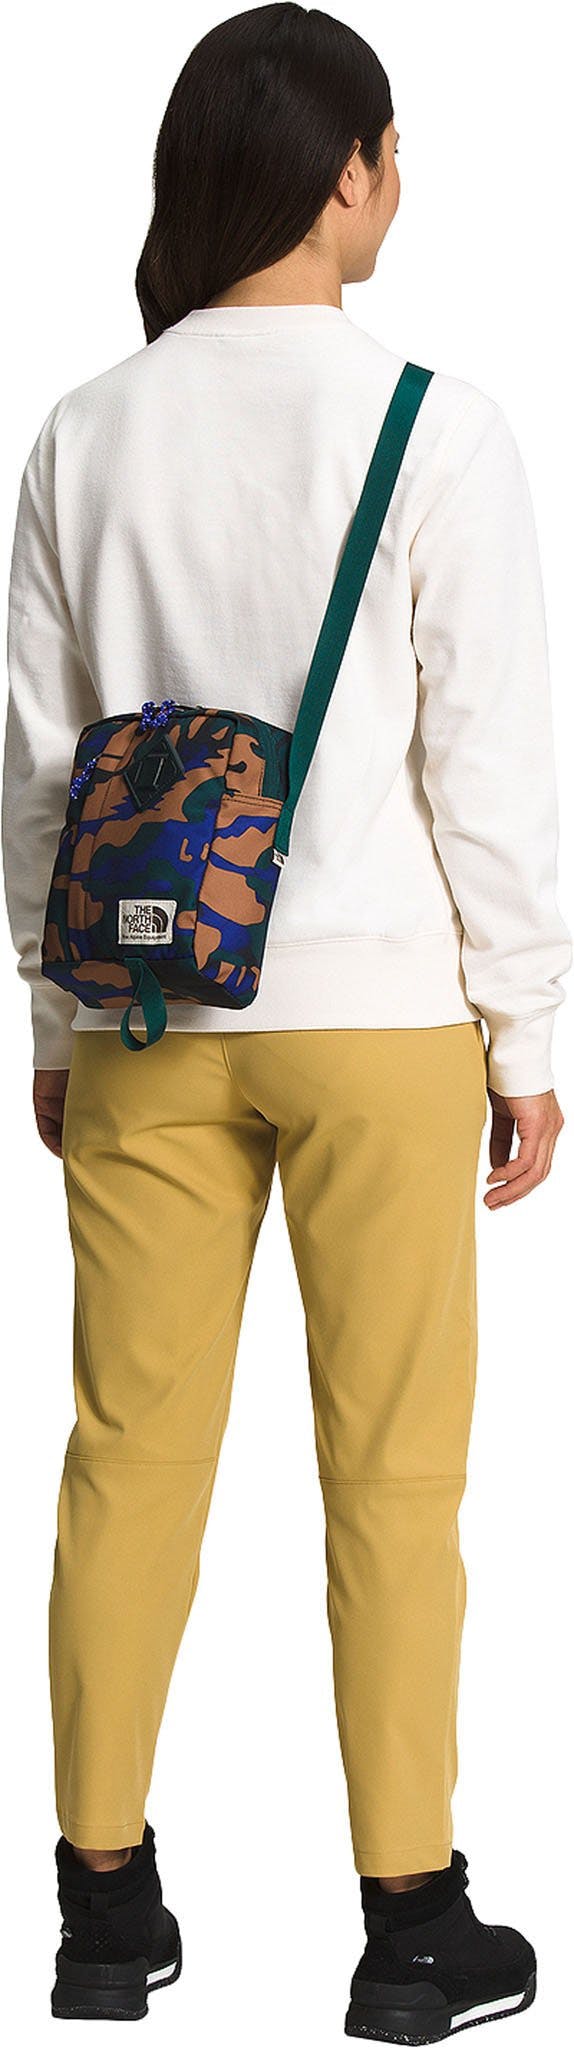 Product gallery image number 4 for product Berkeley Shoulder Bag 4.75L - Women’s